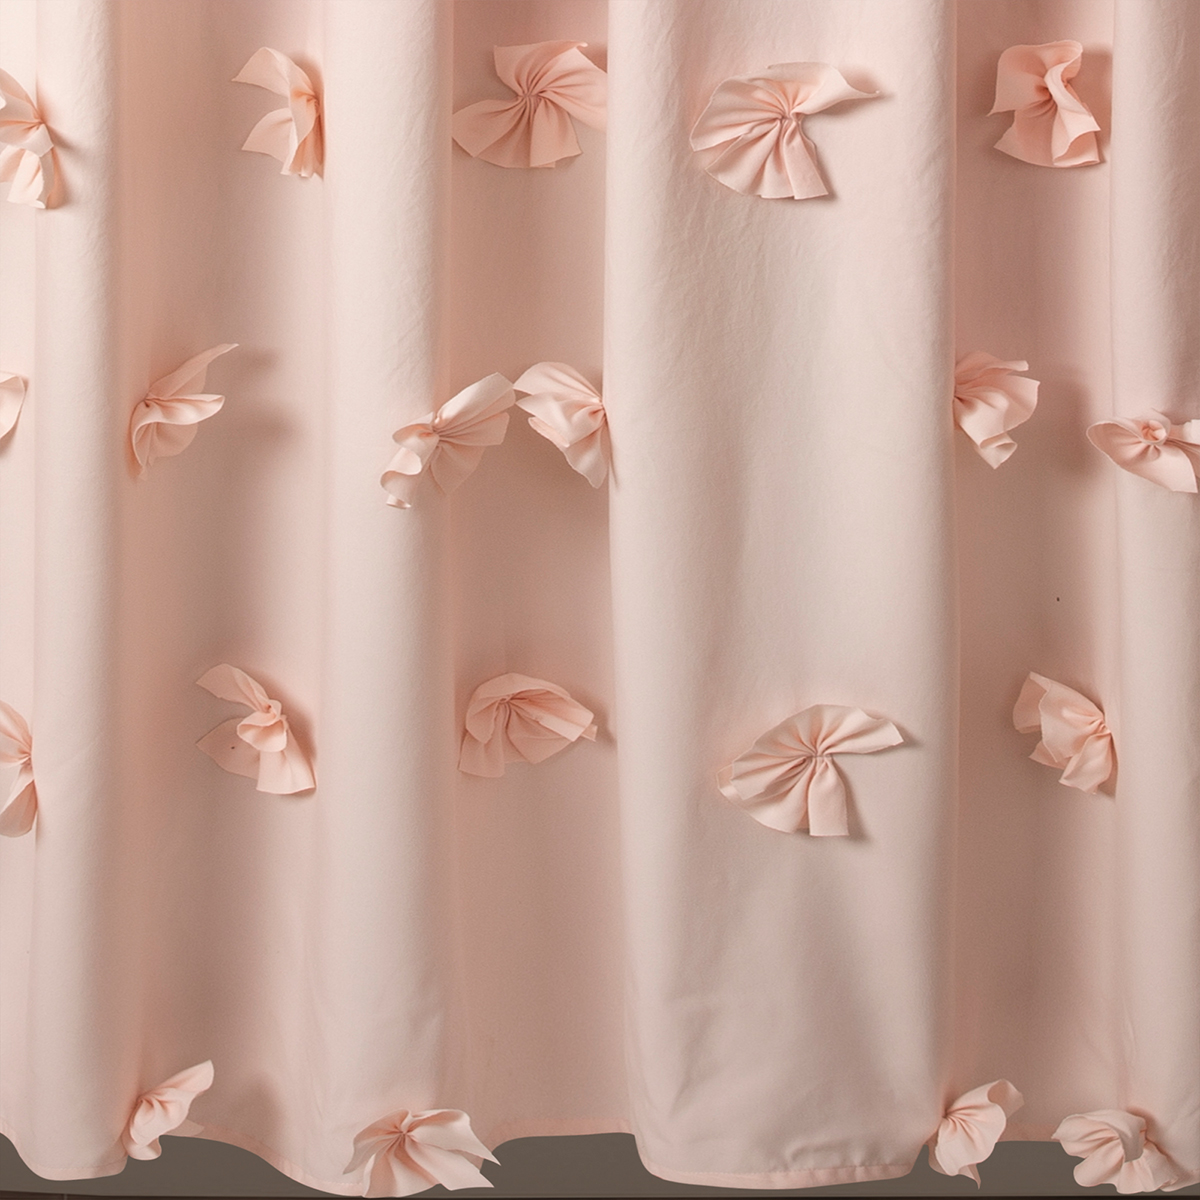 Lush Decor(R) Riley Shower Curtain